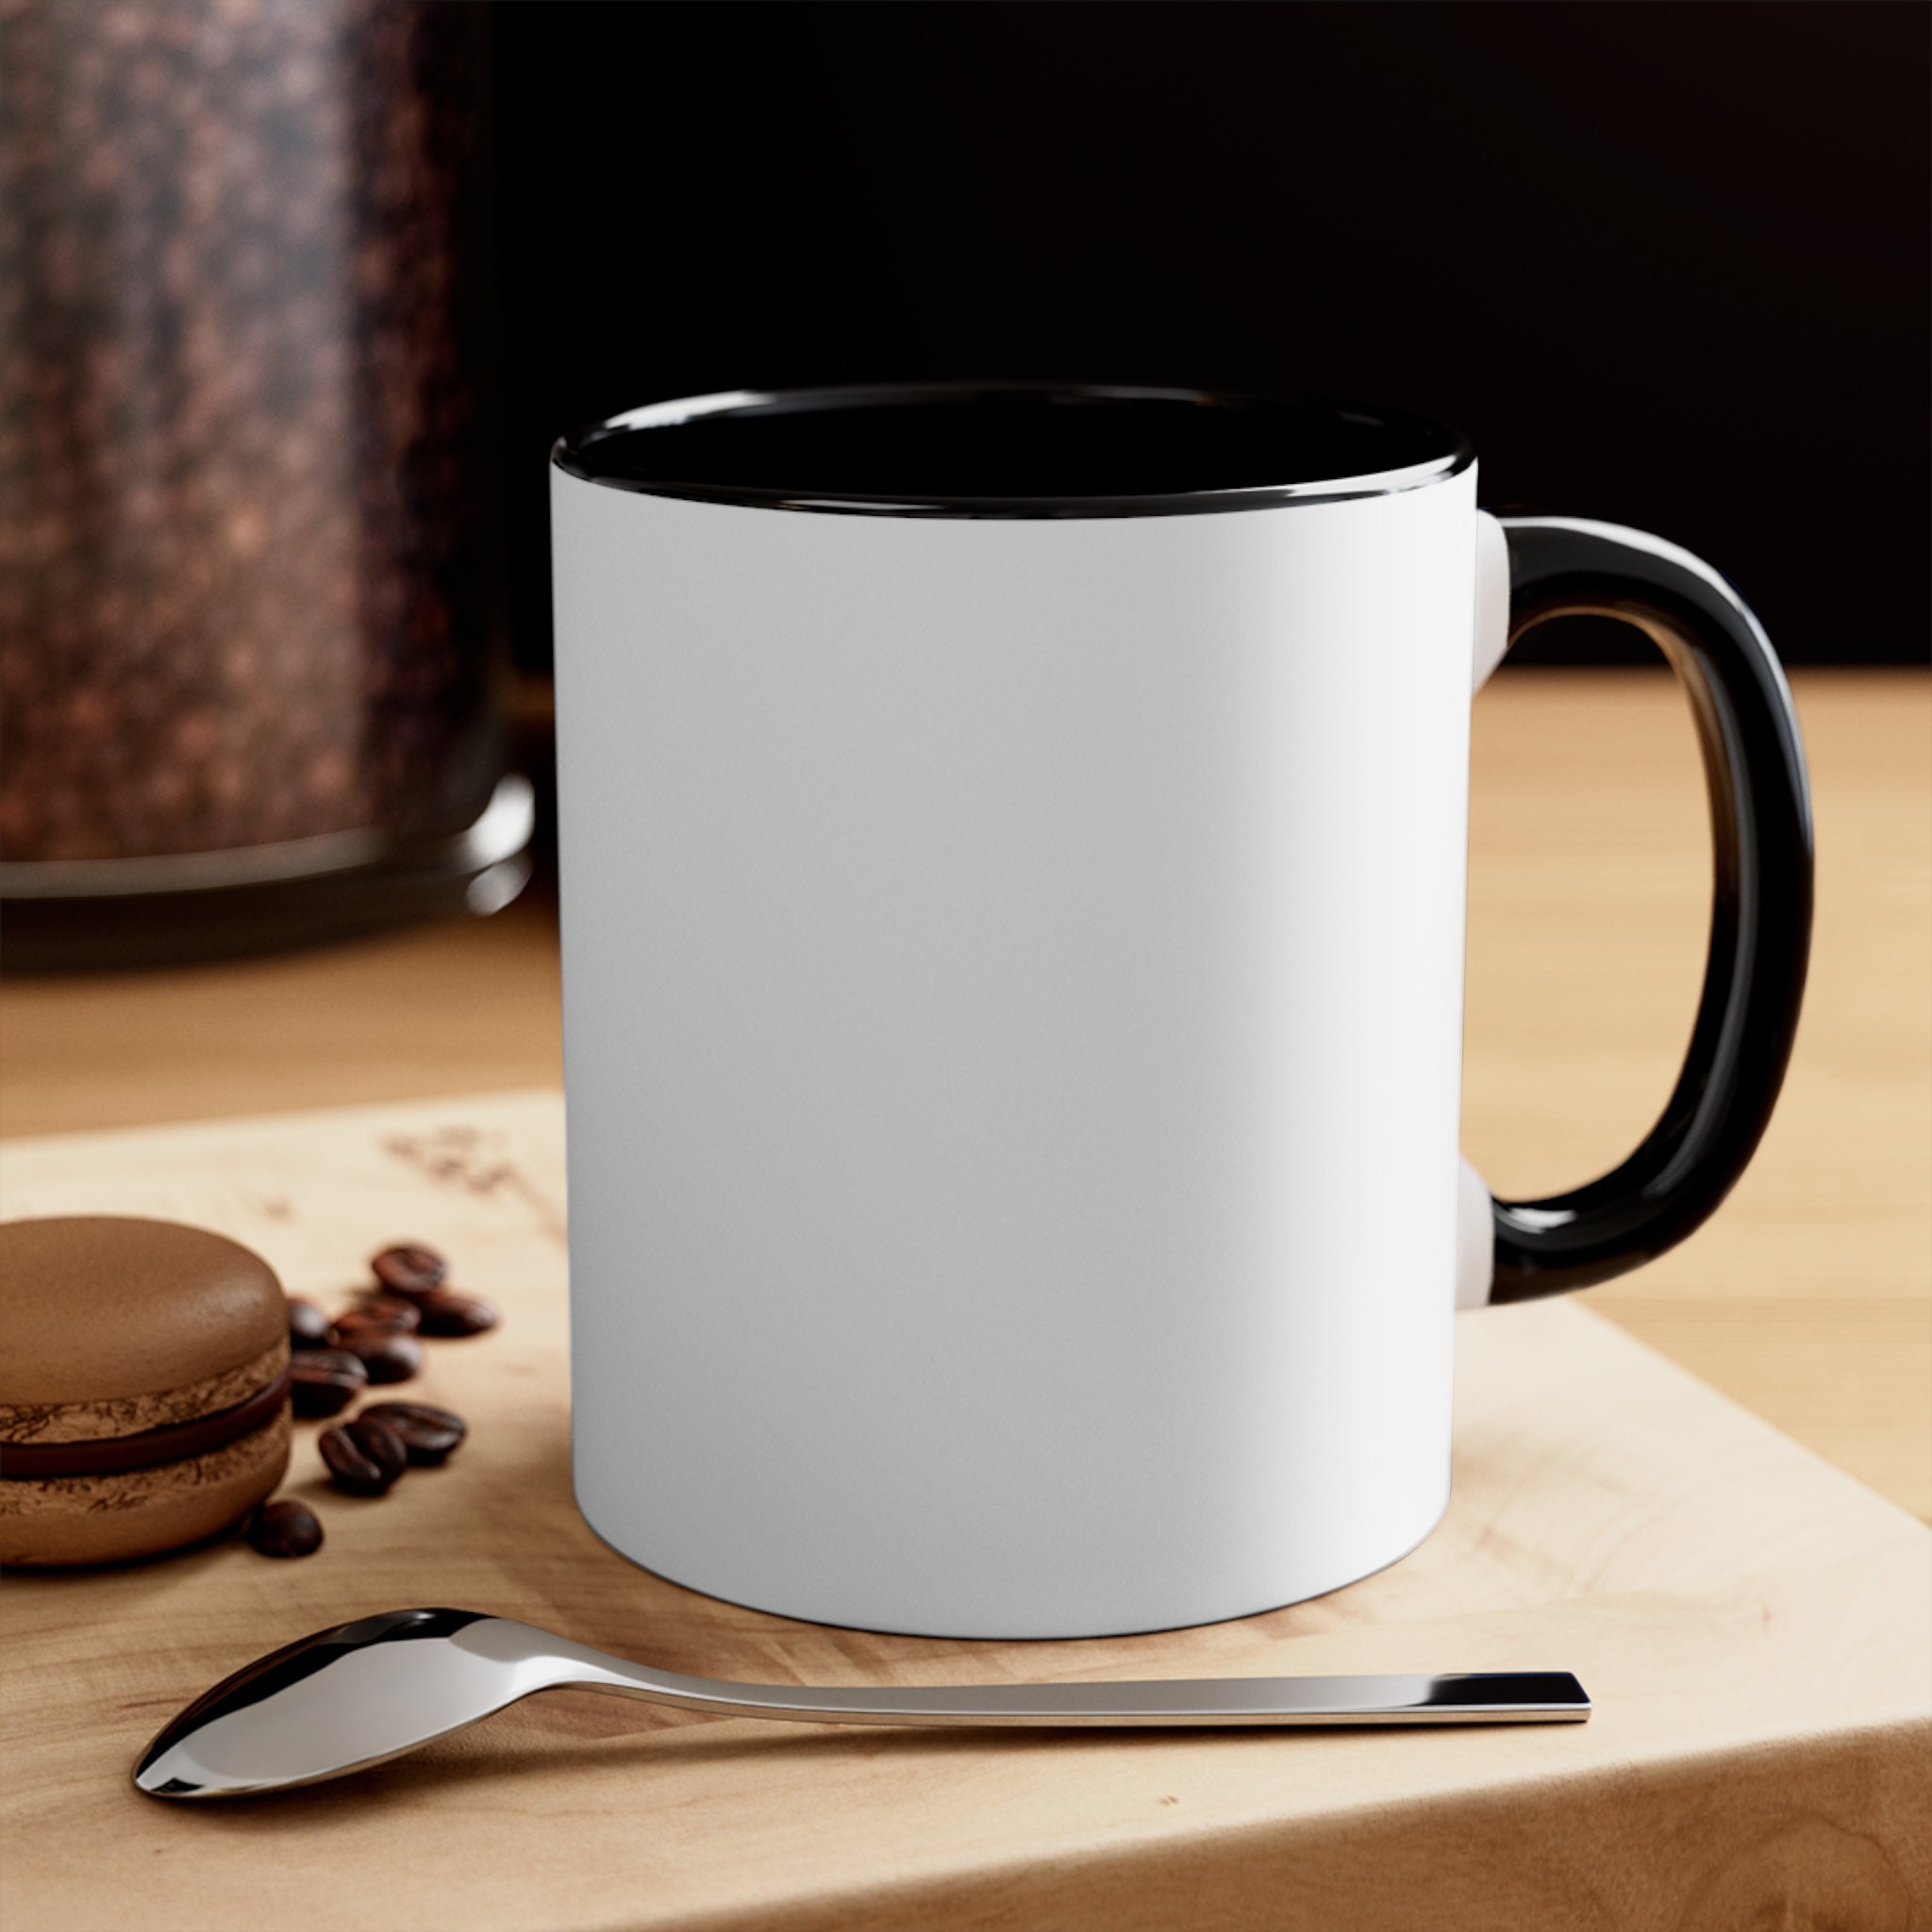 House Warming Coffee Mug for Sale by Huesbyth